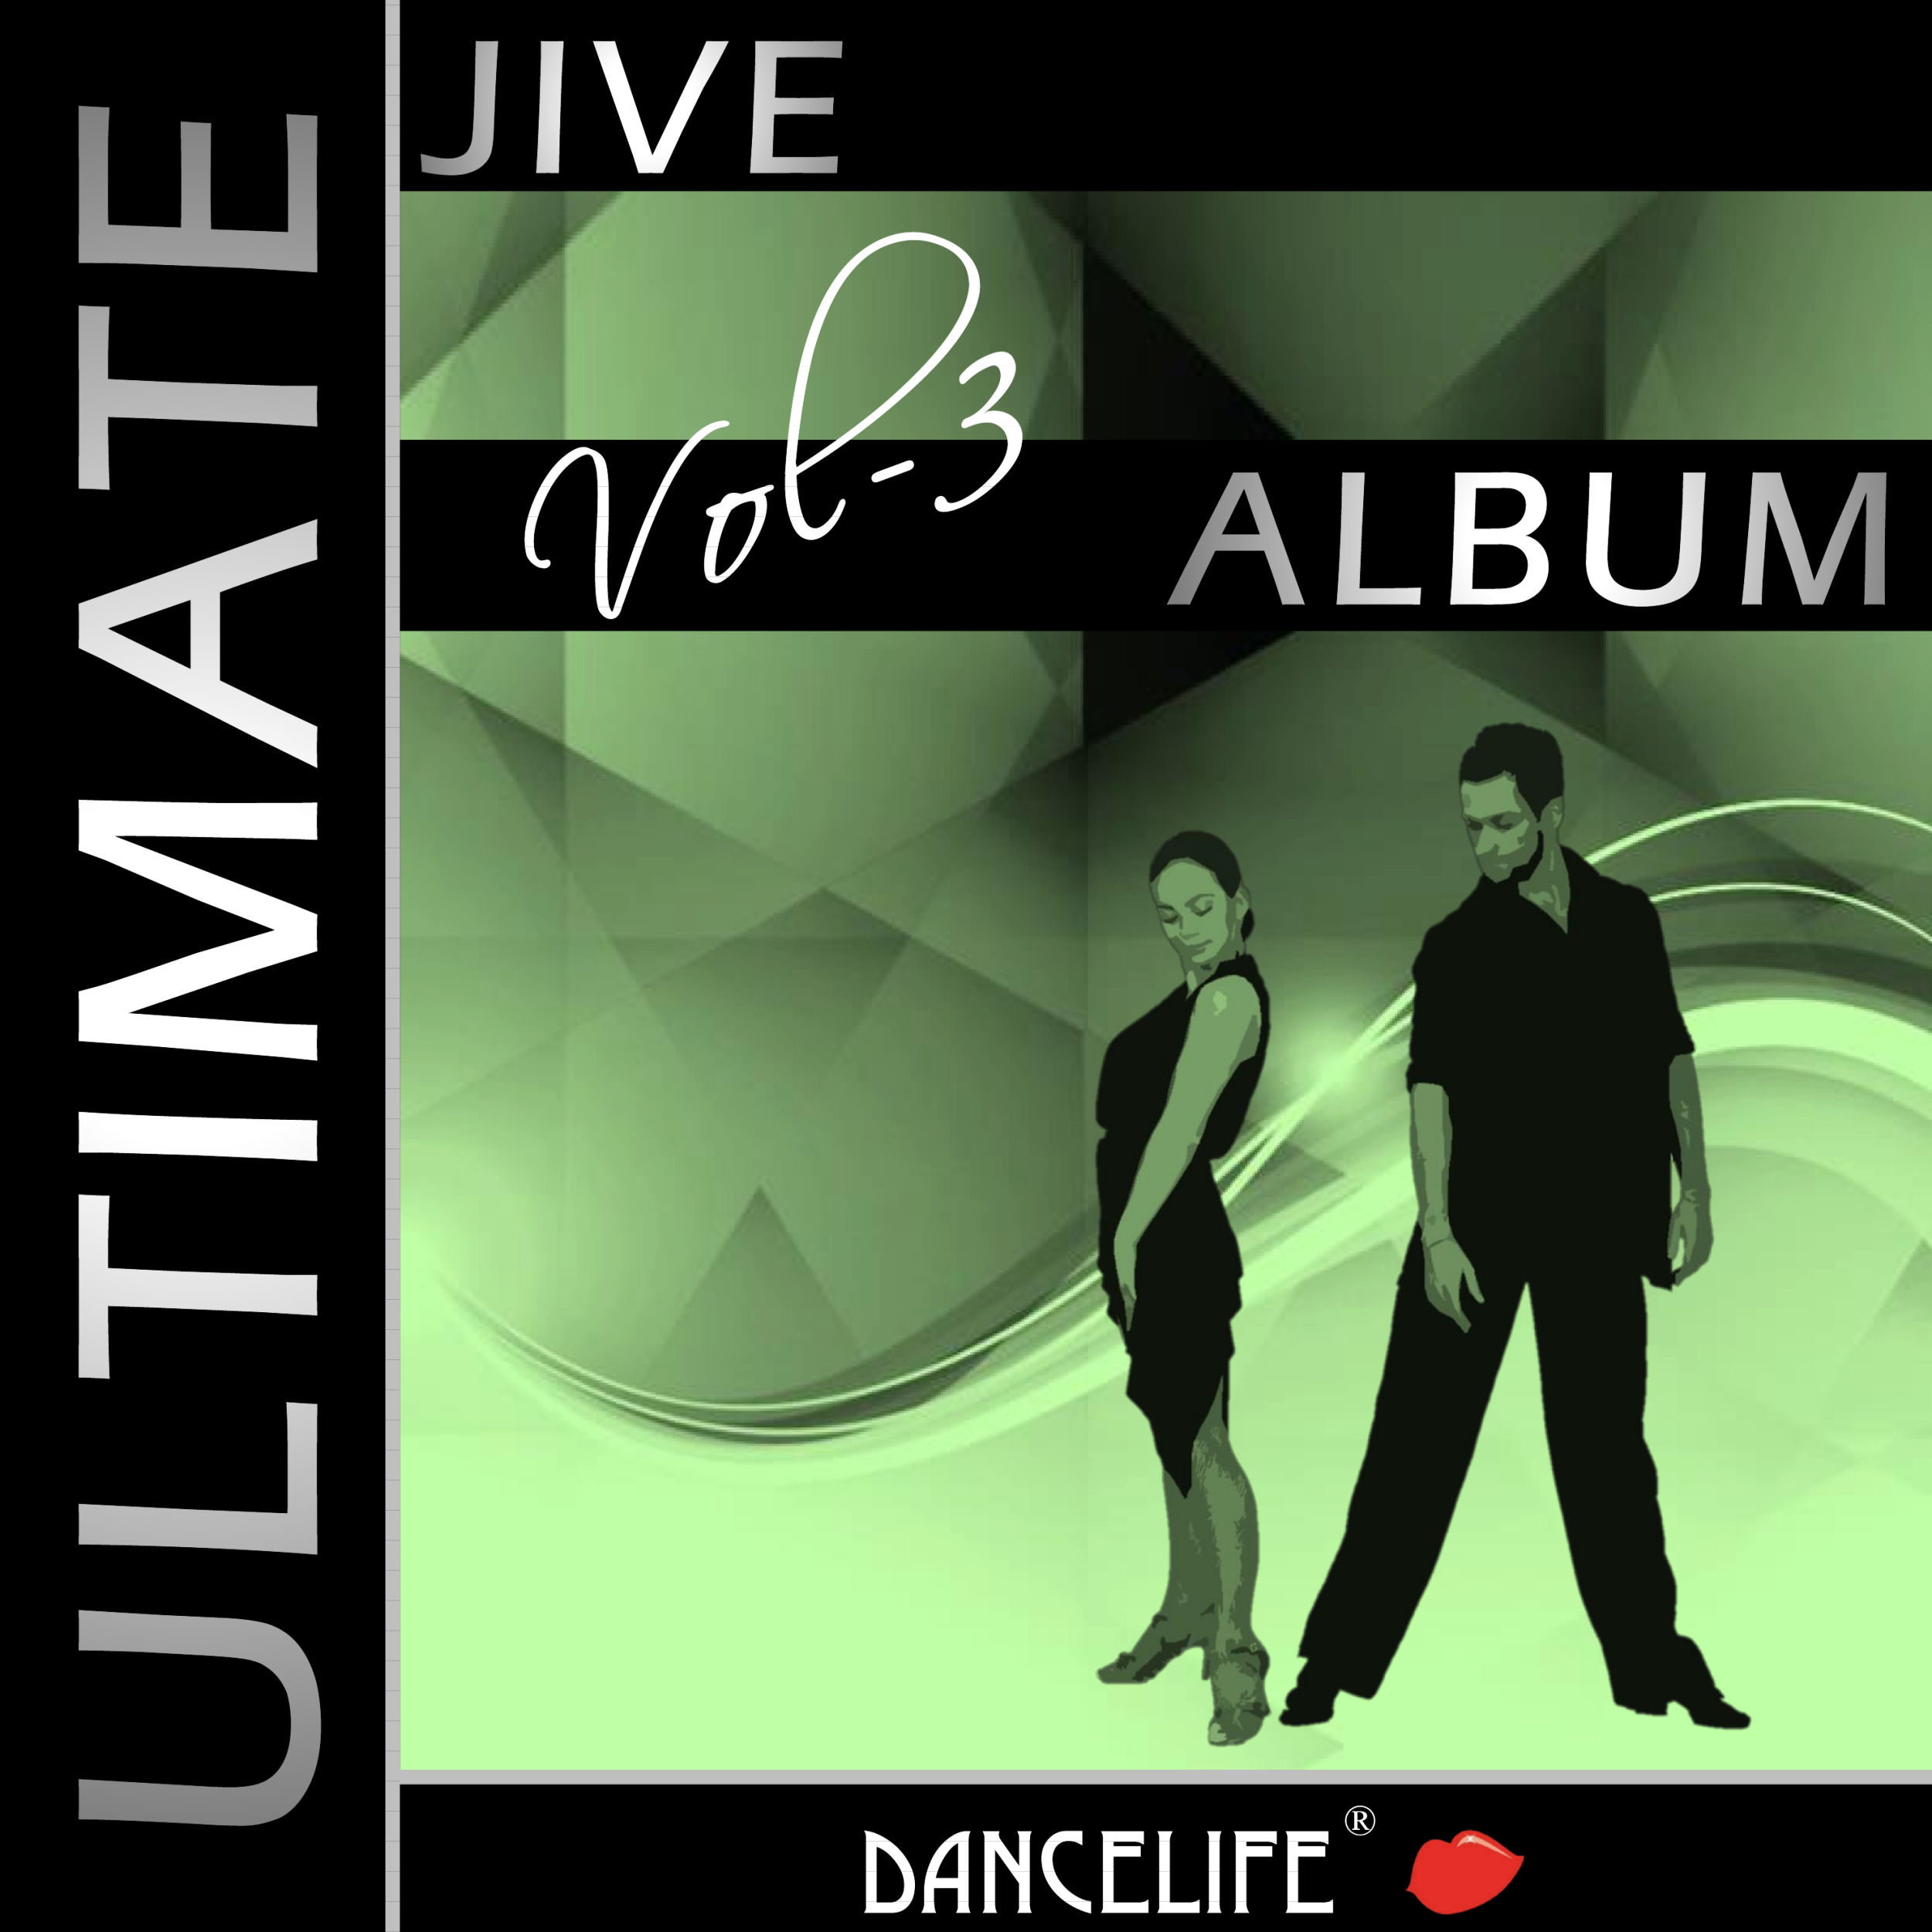 Dancelife presents: The Ultimate Jive Album, Vol. 3